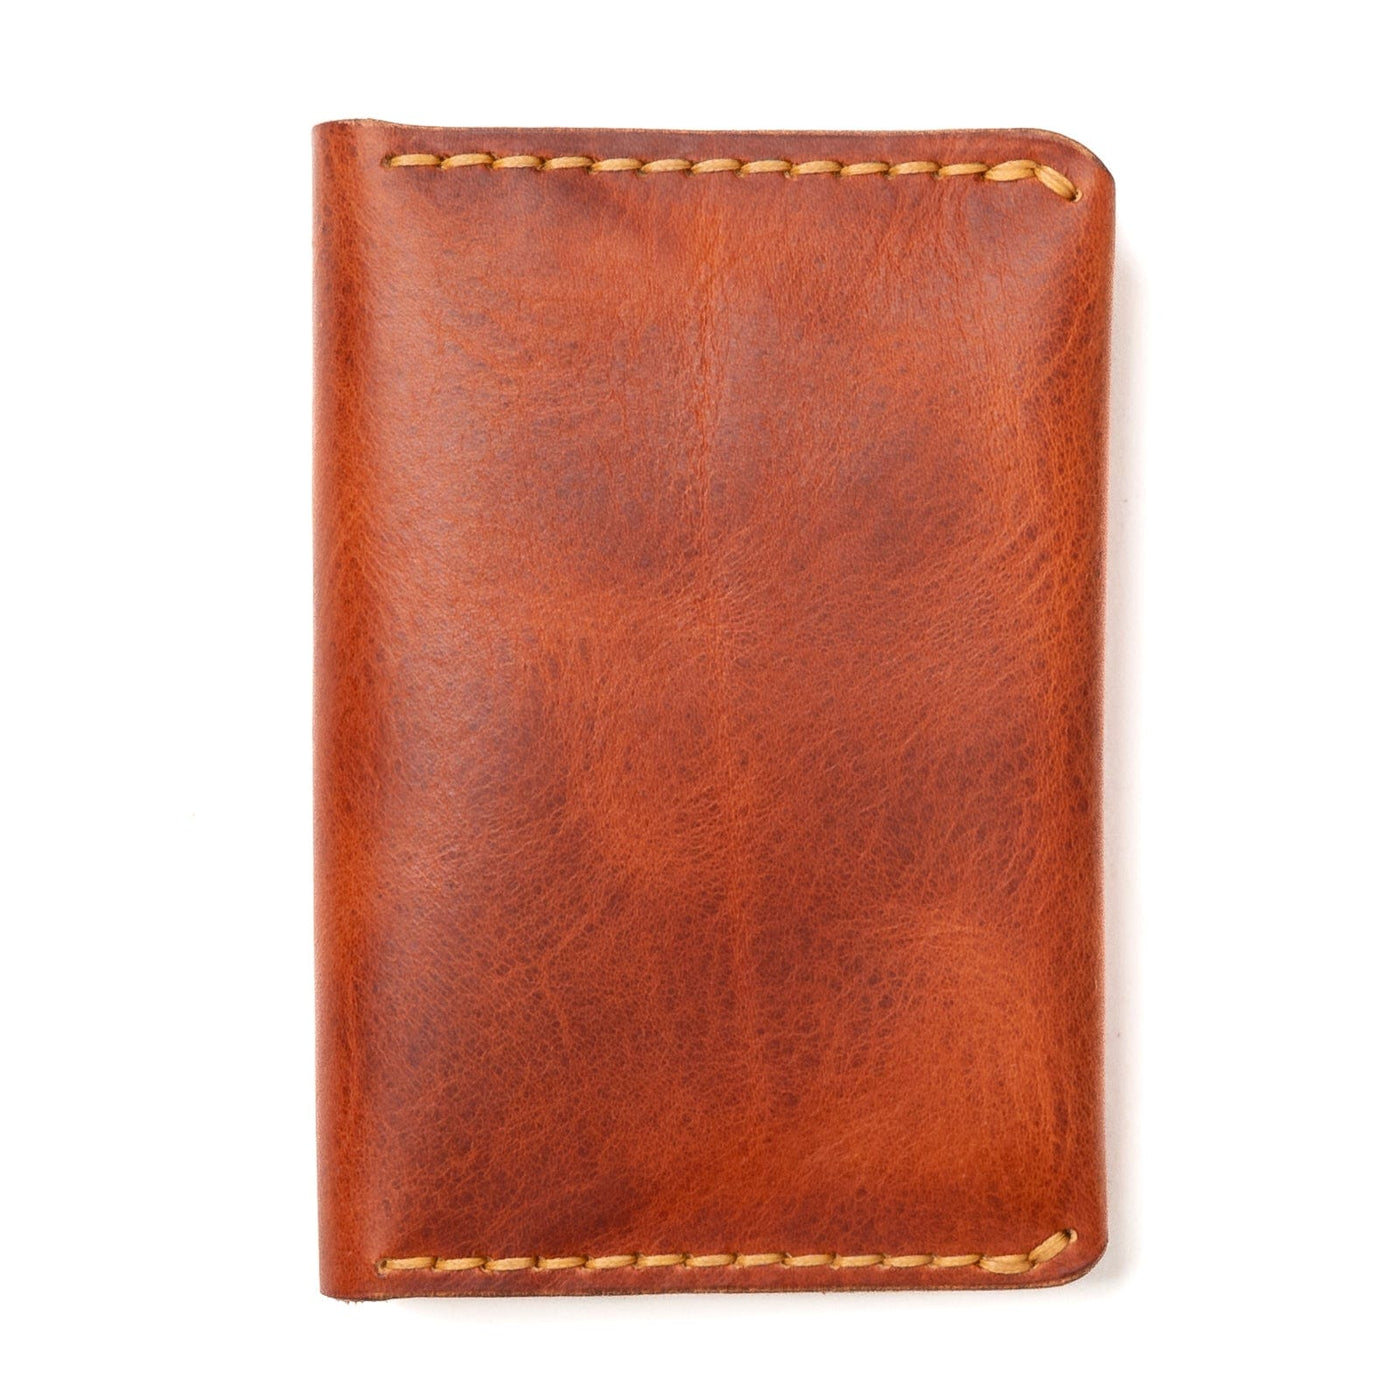 Leather Passport Cover - English Tan Popov Leather